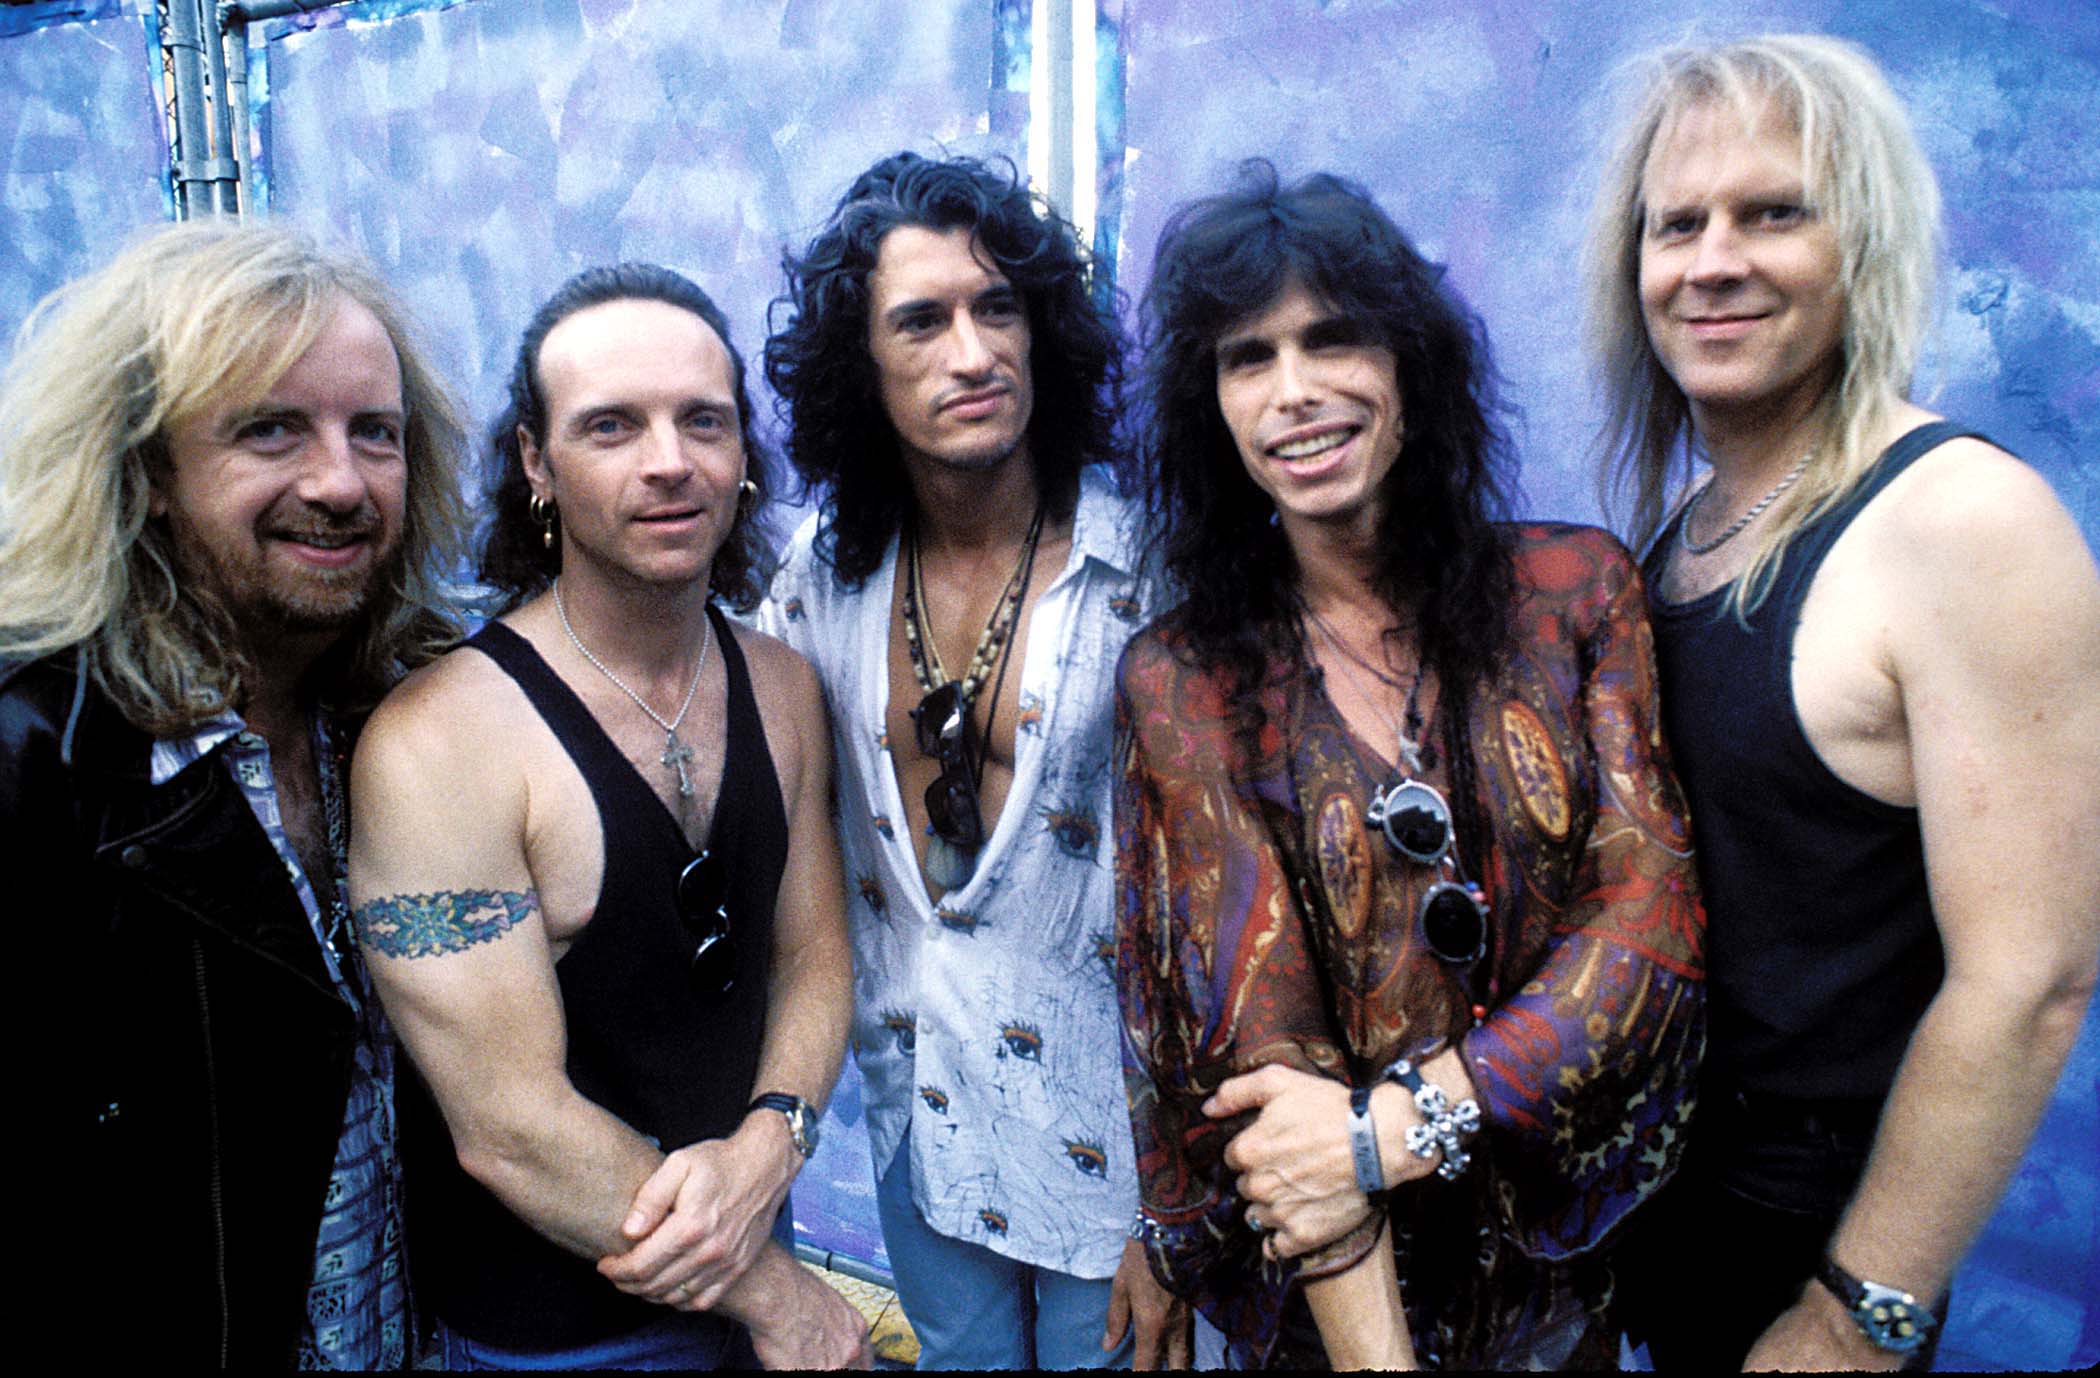 Aerosmith's Brad Whitford, Joey Kramer, Joe Perry, Steve Tyler and Tom Hamilton in front of a wall